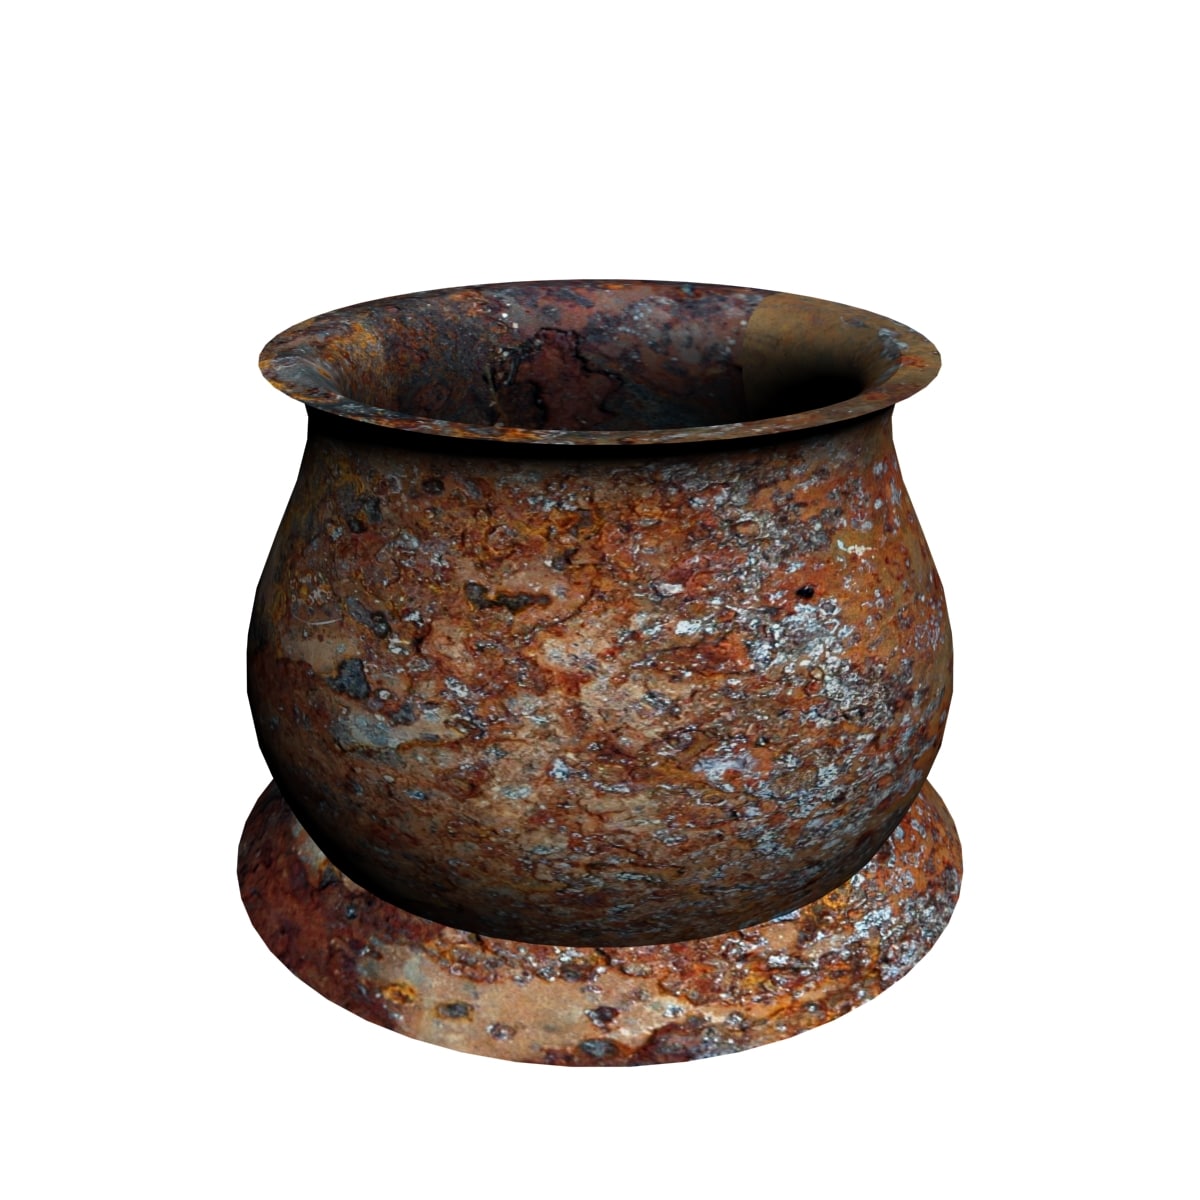  3D  rusty pot  model  TurboSquid 1194415